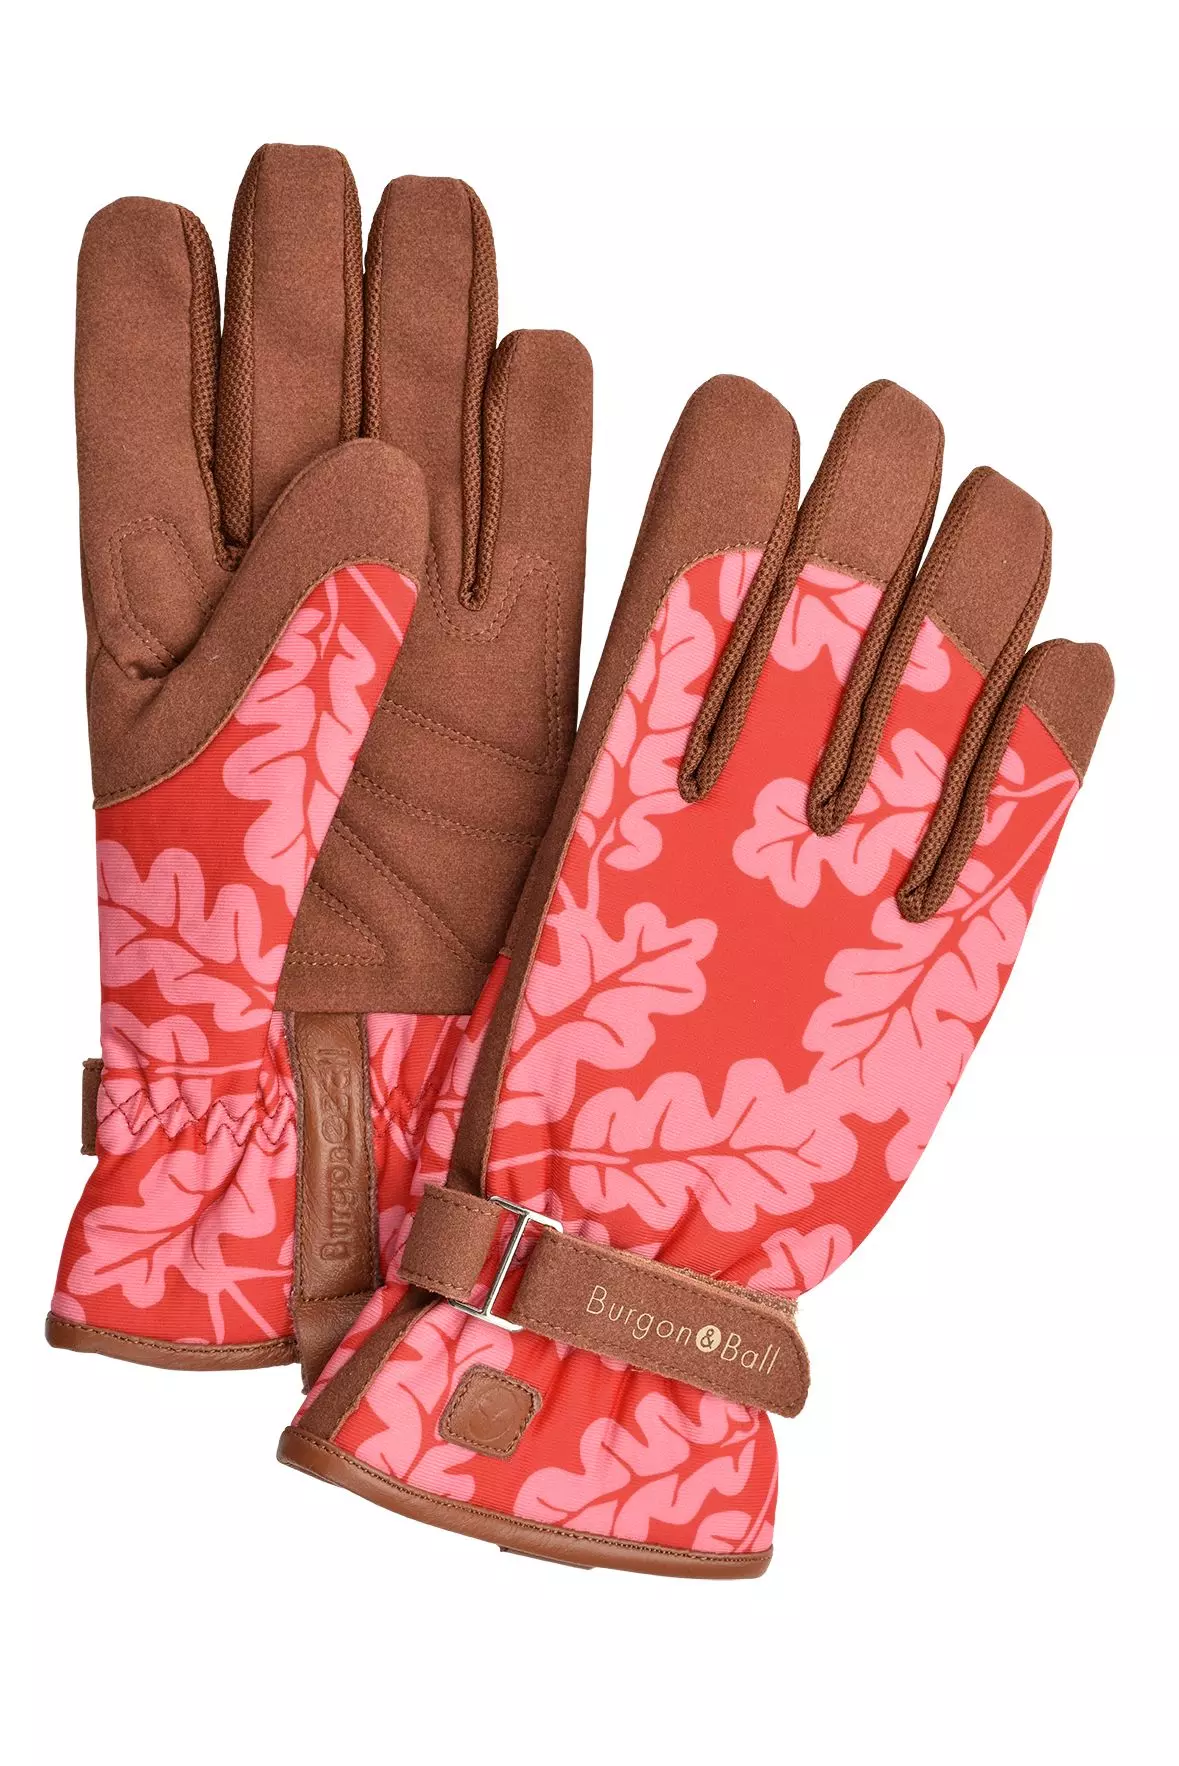 Vrtne rokavice BURGON & BALL Love The Glove 